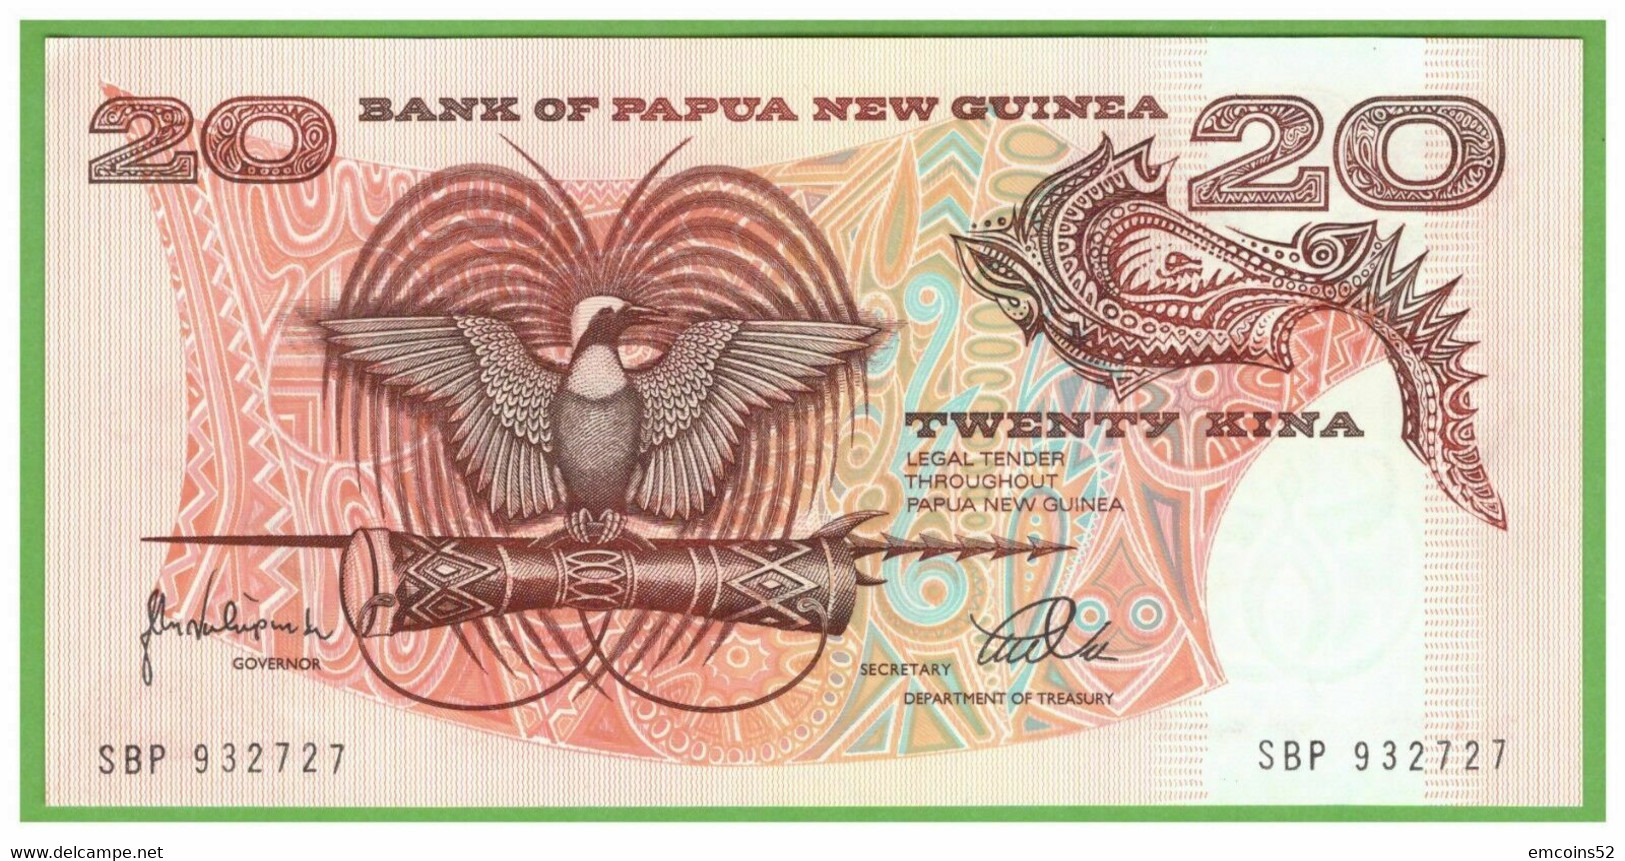 PAPUA NEW GUINEA 20 DOLLARS 1998  P-10c  UNC - Papua New Guinea